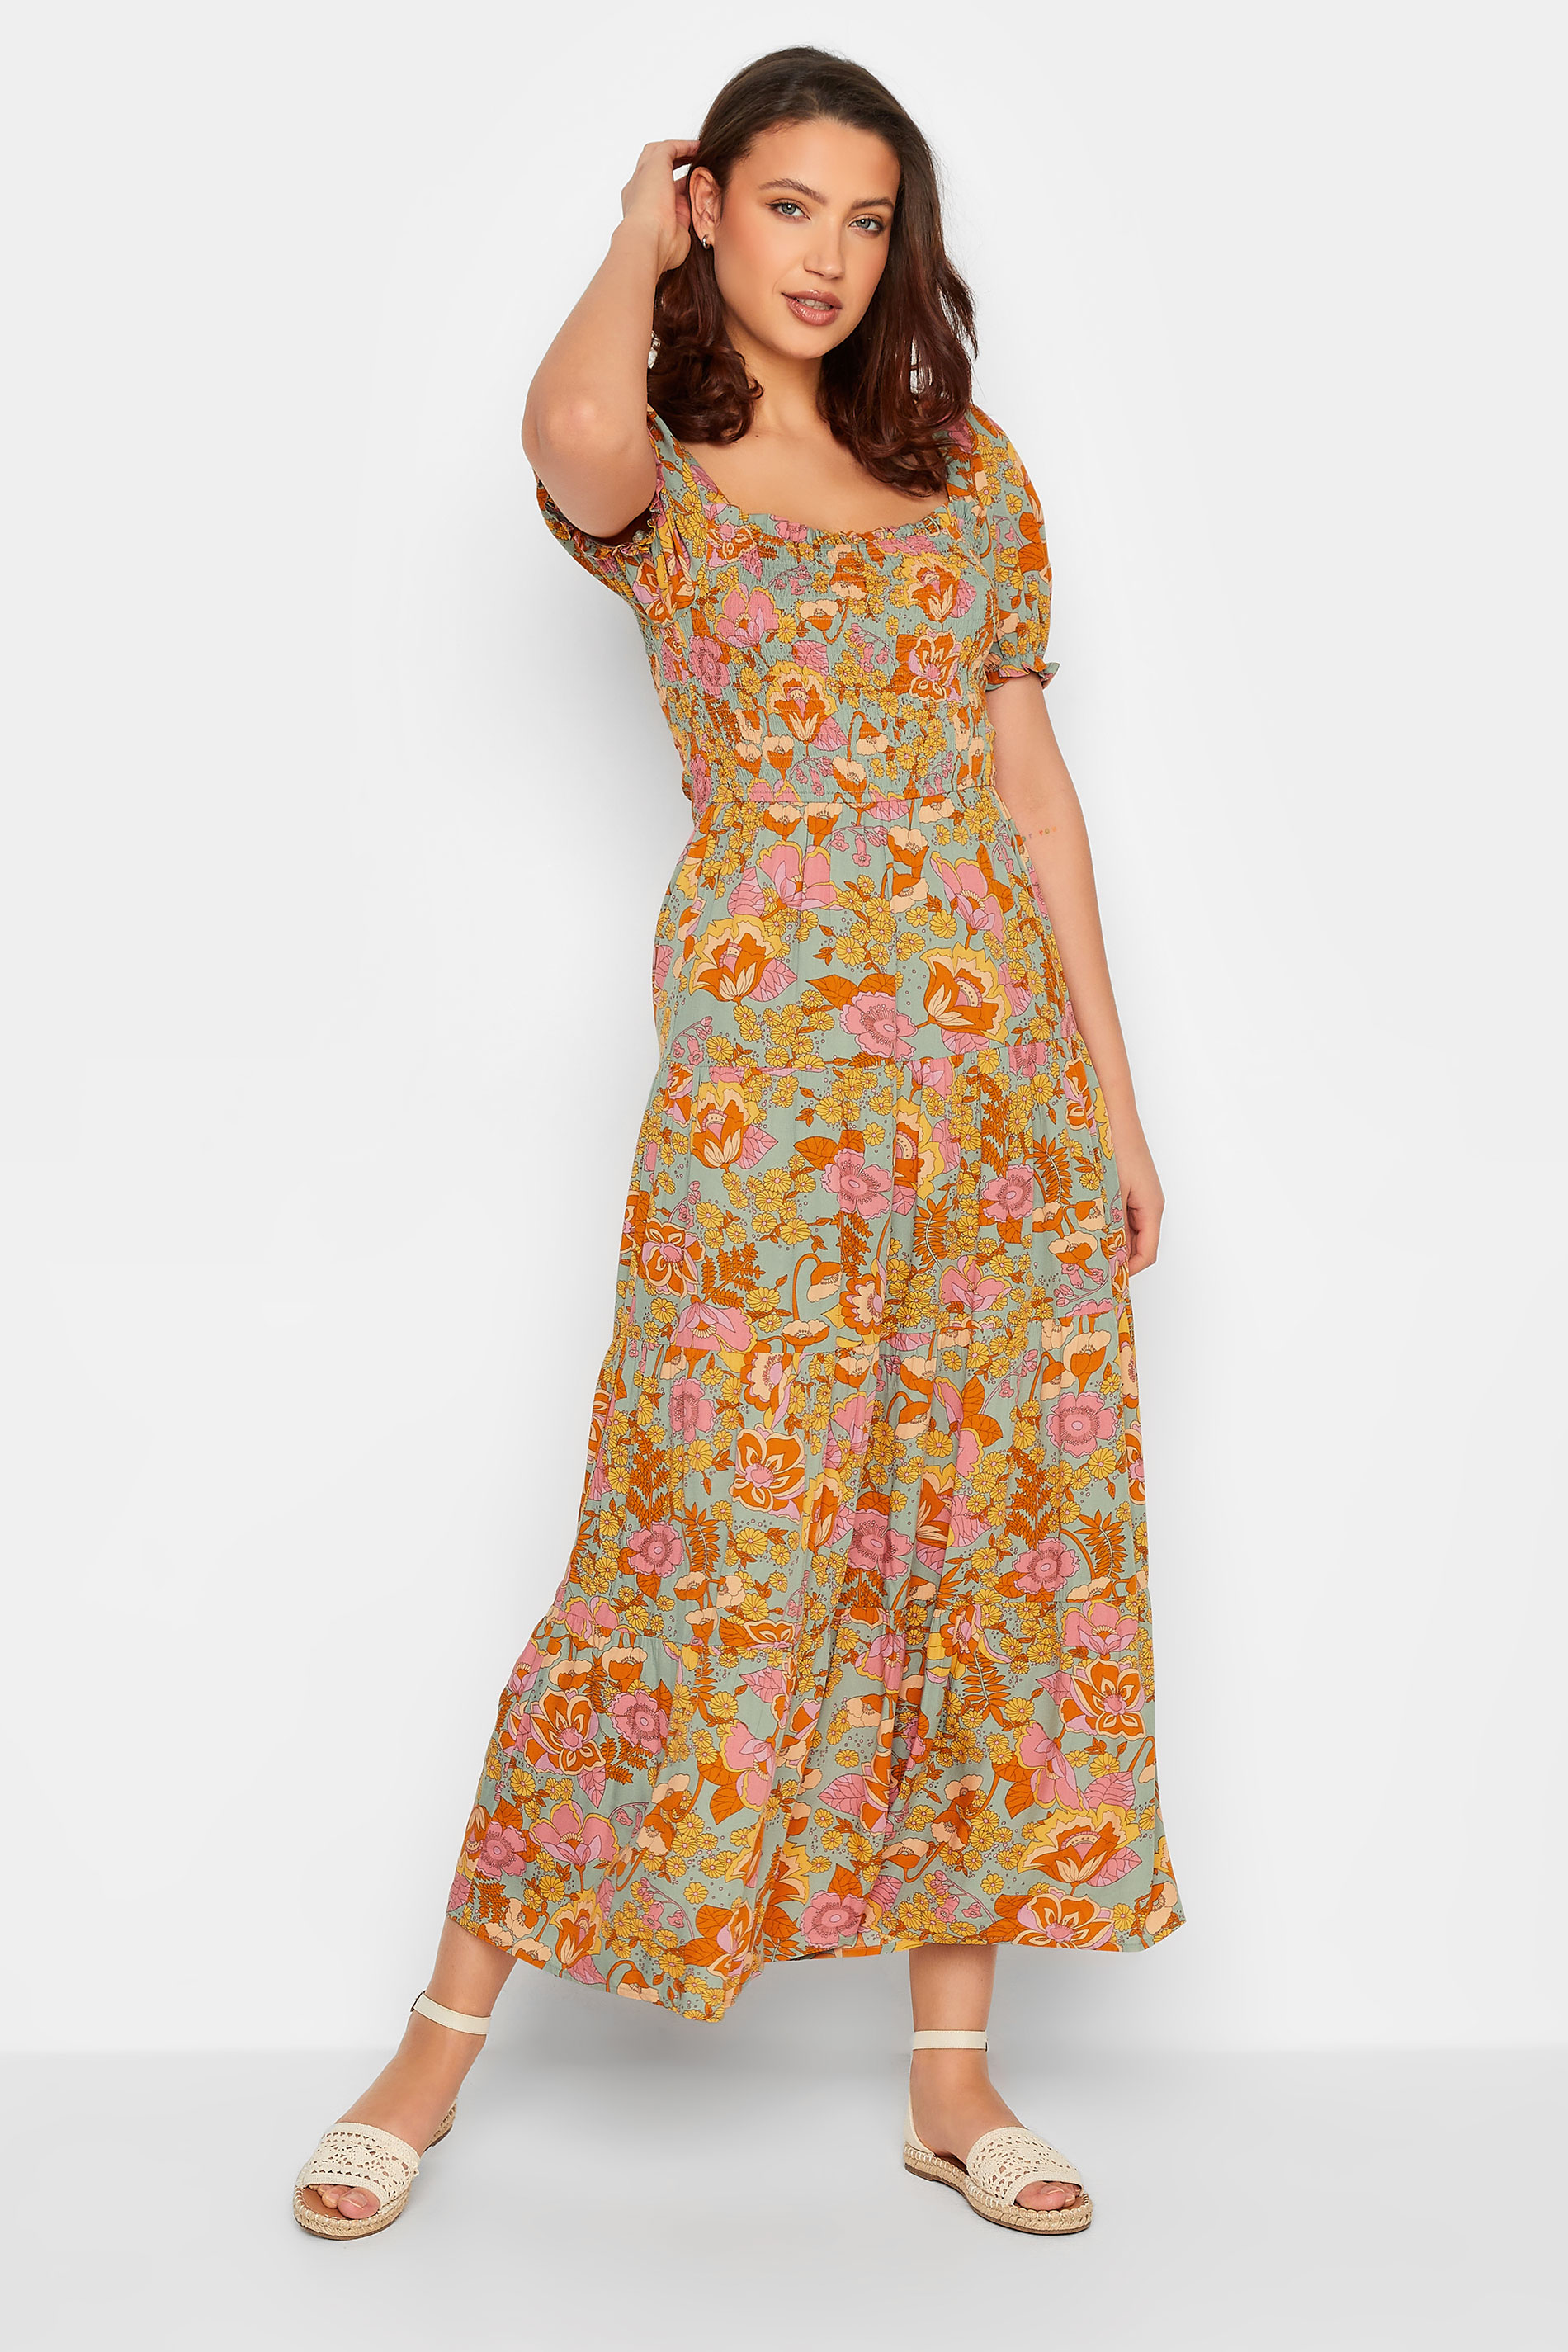 LTS Tall Orange Floral Square Neck Maxi Dress | Long Tall Sally  2